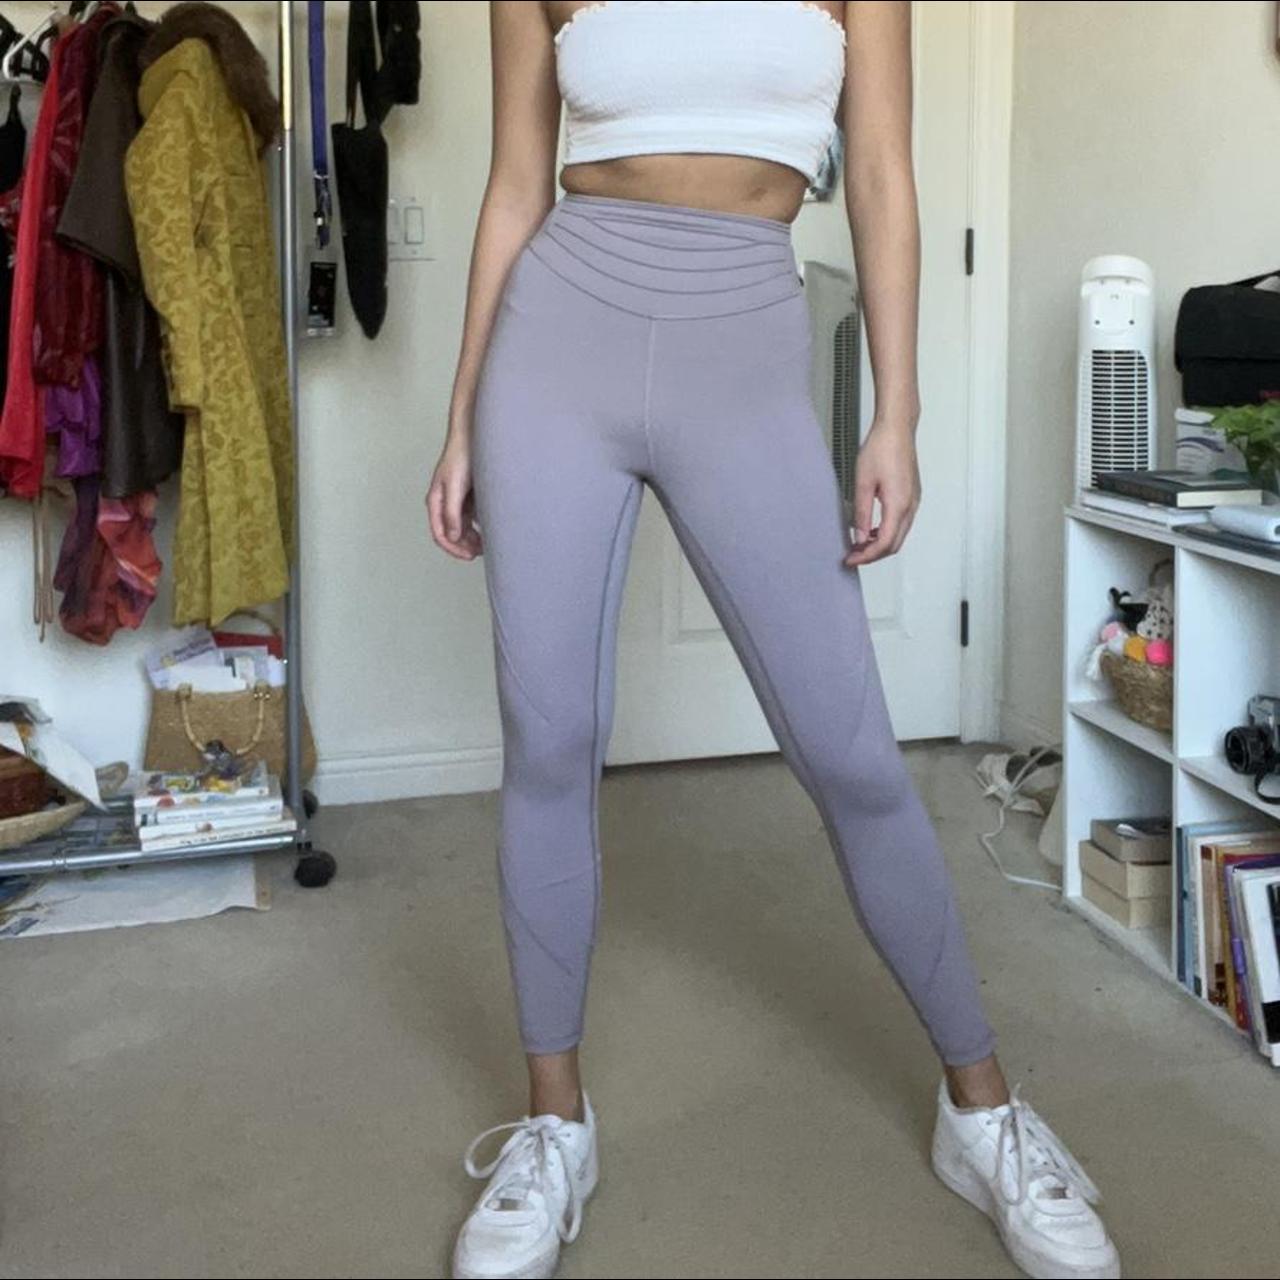 light purple leggings - SUPER soft, lightweight and - Depop